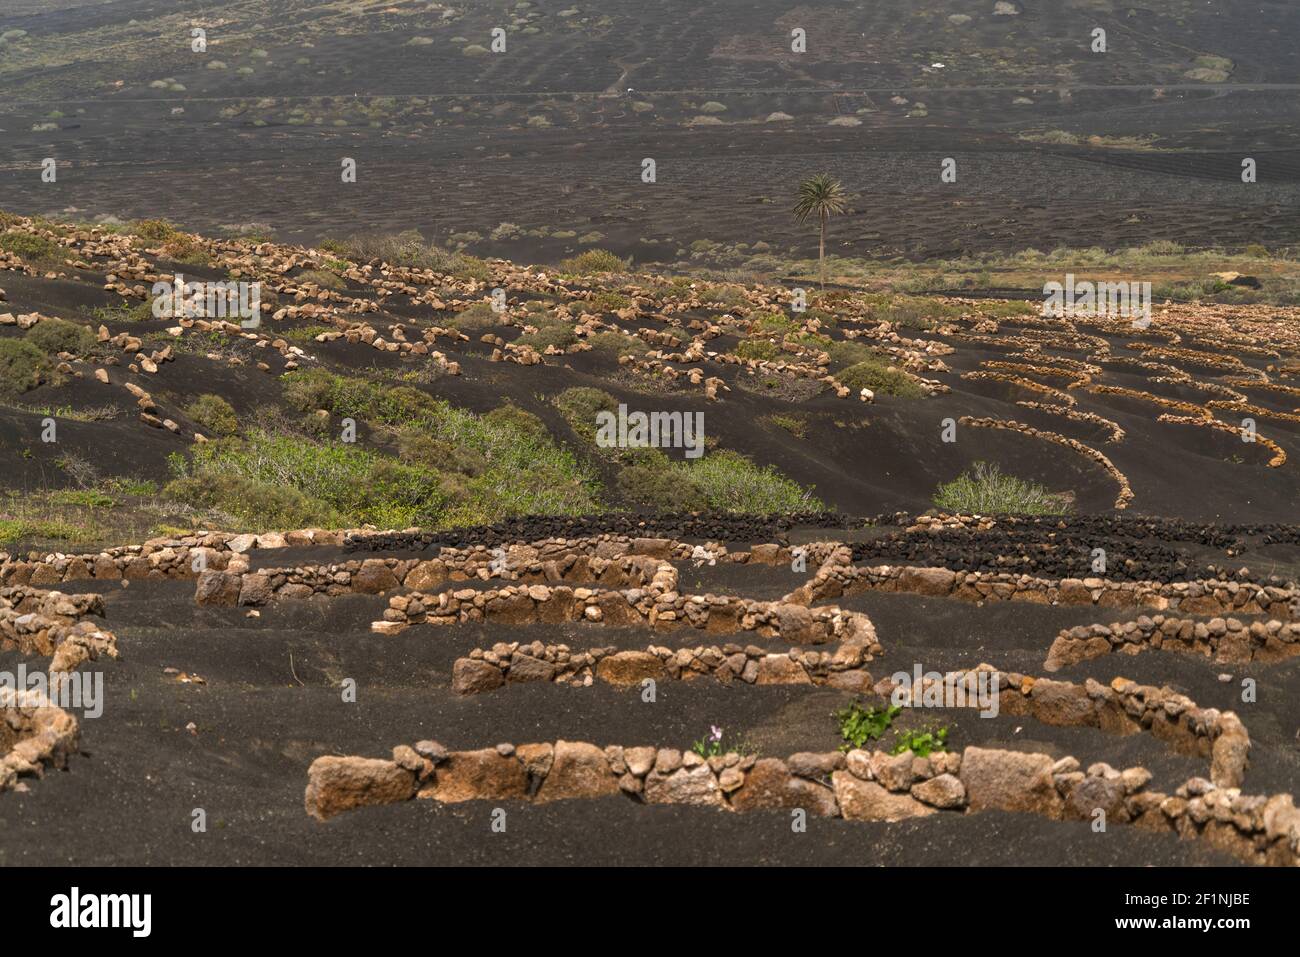 Landschaft mit Trockenfeldbau von Wein BEI la Geria, Insel Lanzarote, Kanarische Inseln, Spanien | Paysage avec culture viticole des terres arides près de la Geria Banque D'Images